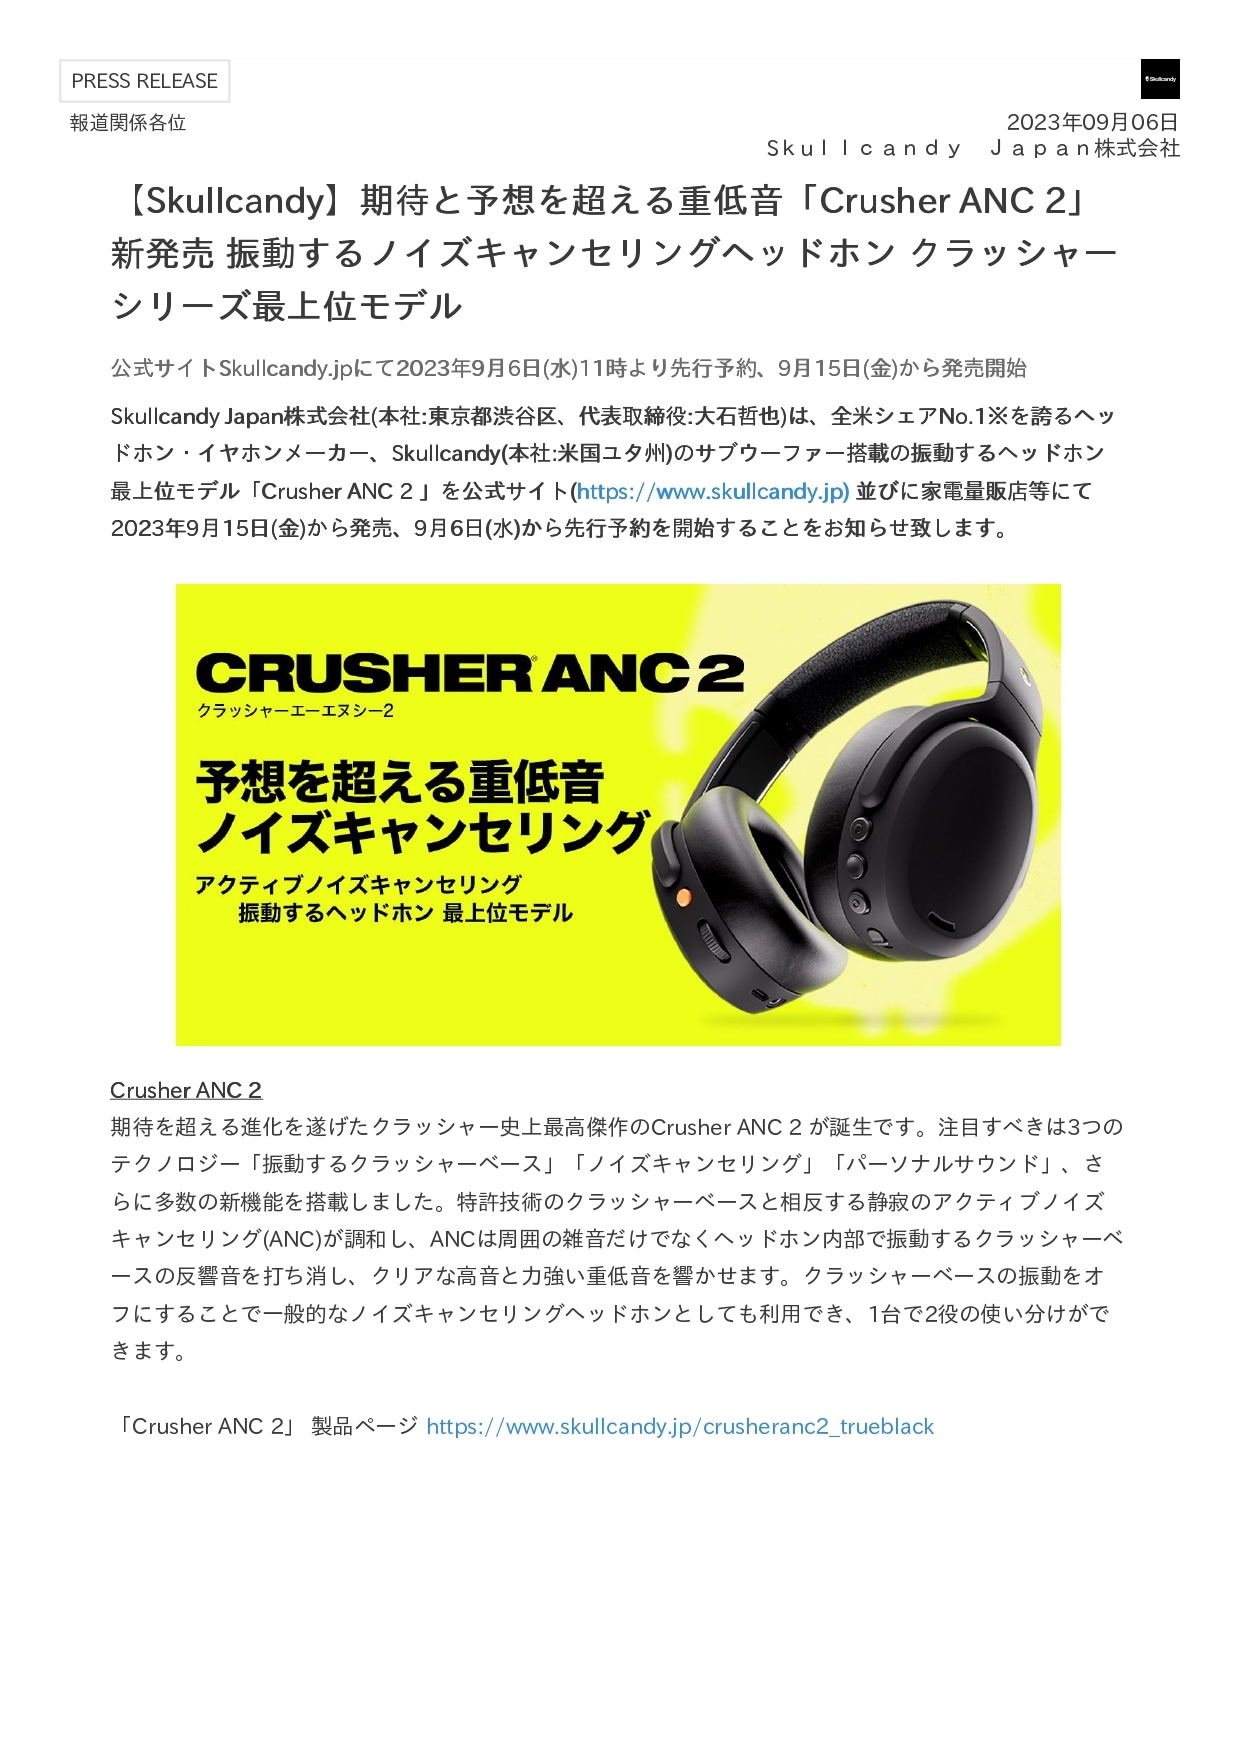 “CrusherANC2プレスリリース“